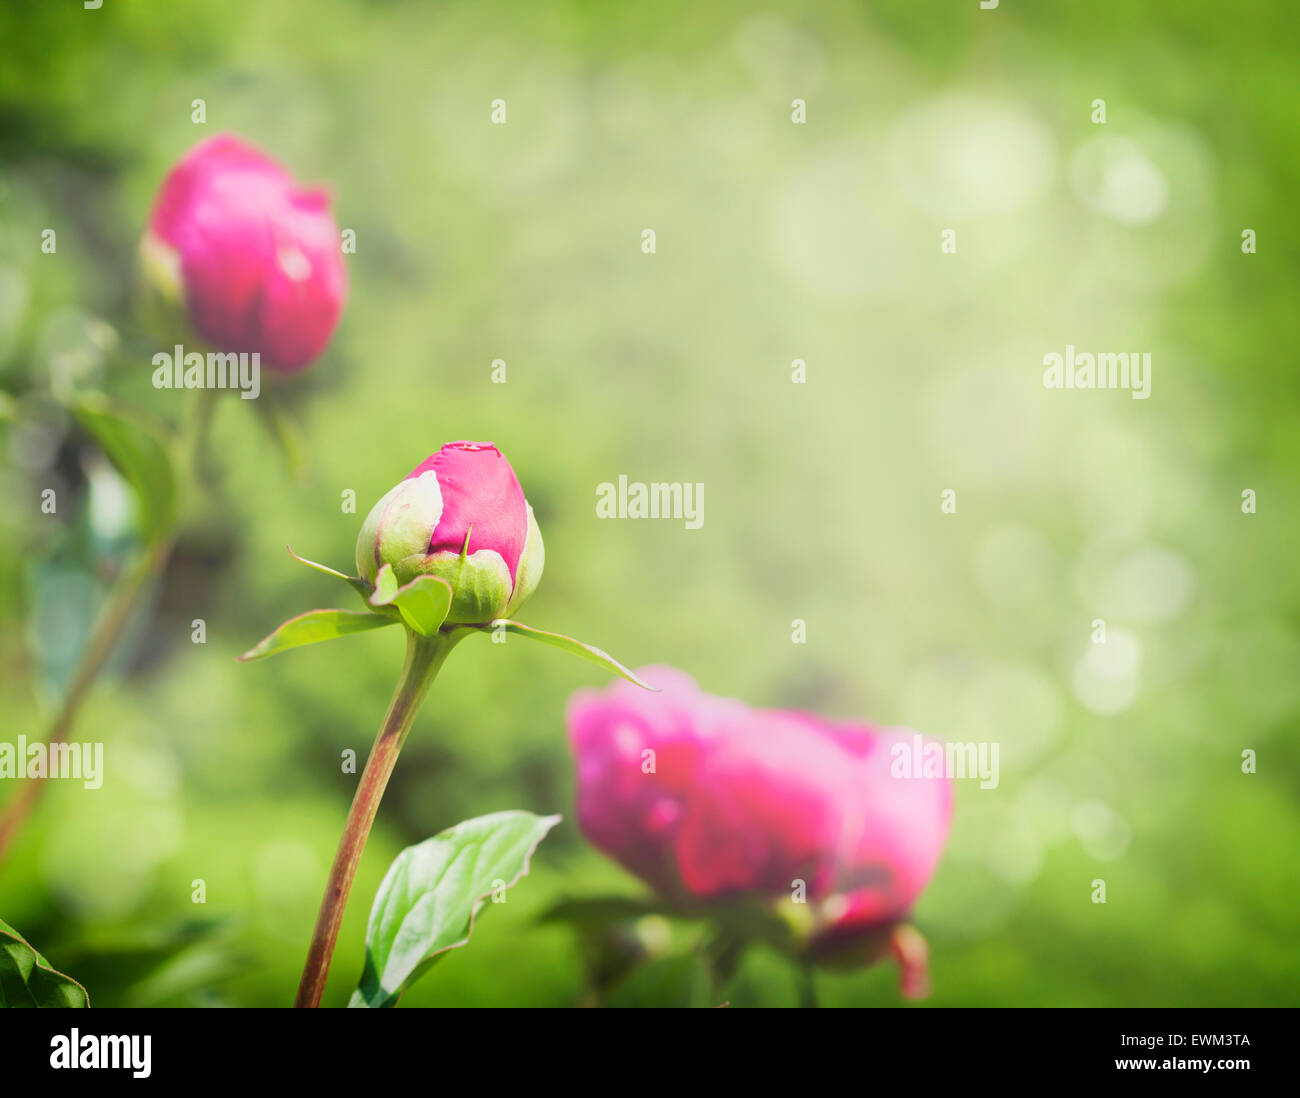 Peony on blurred garden background Stock Photo